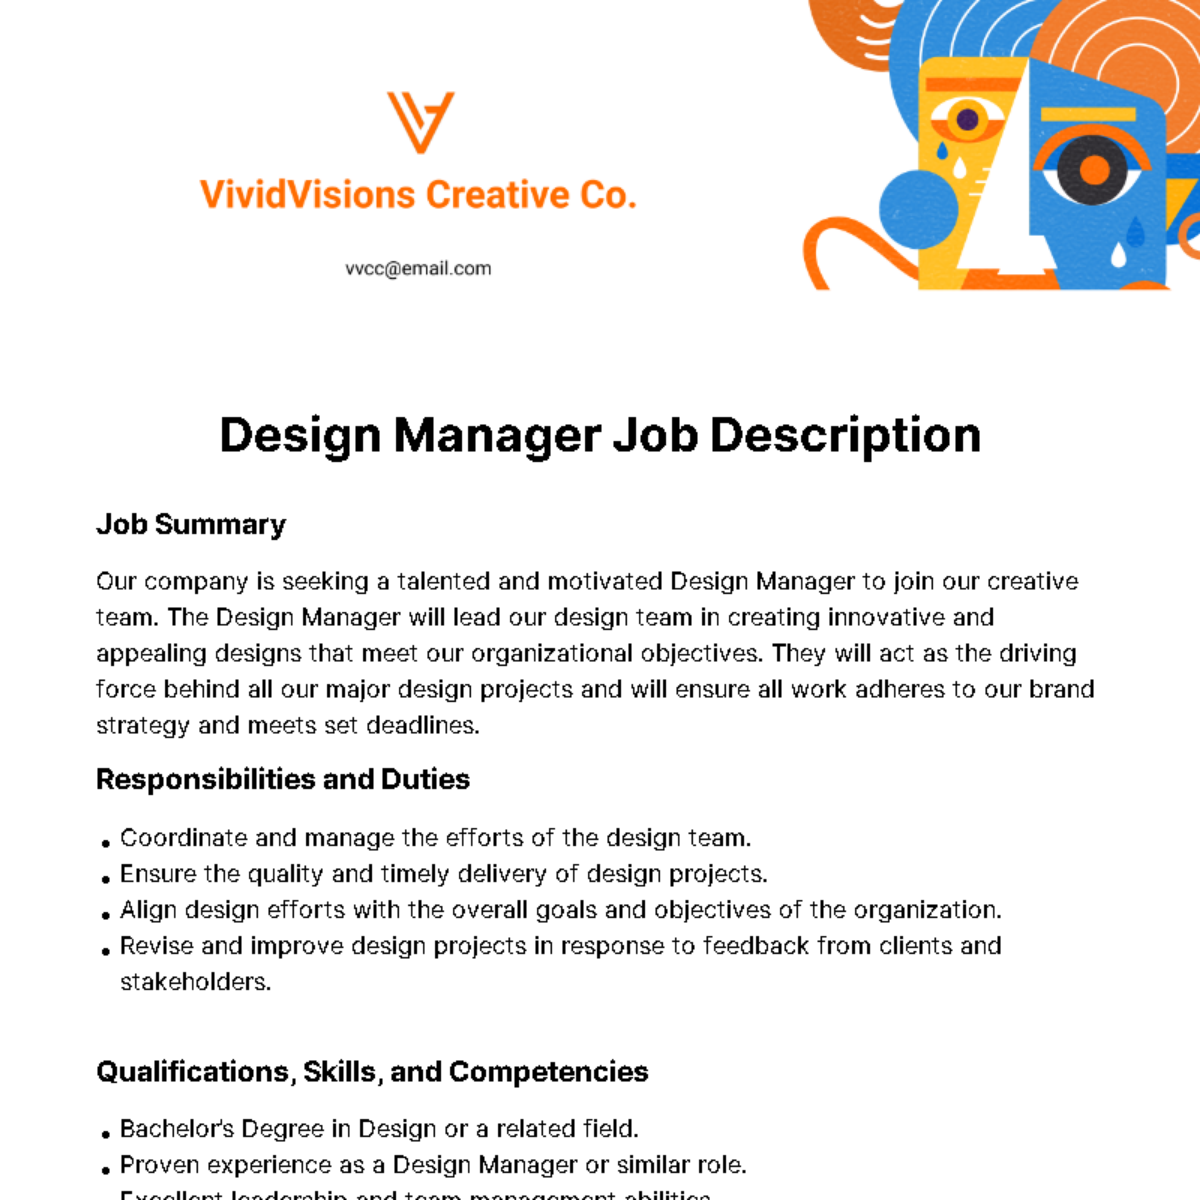 Design Manager Job Description Template